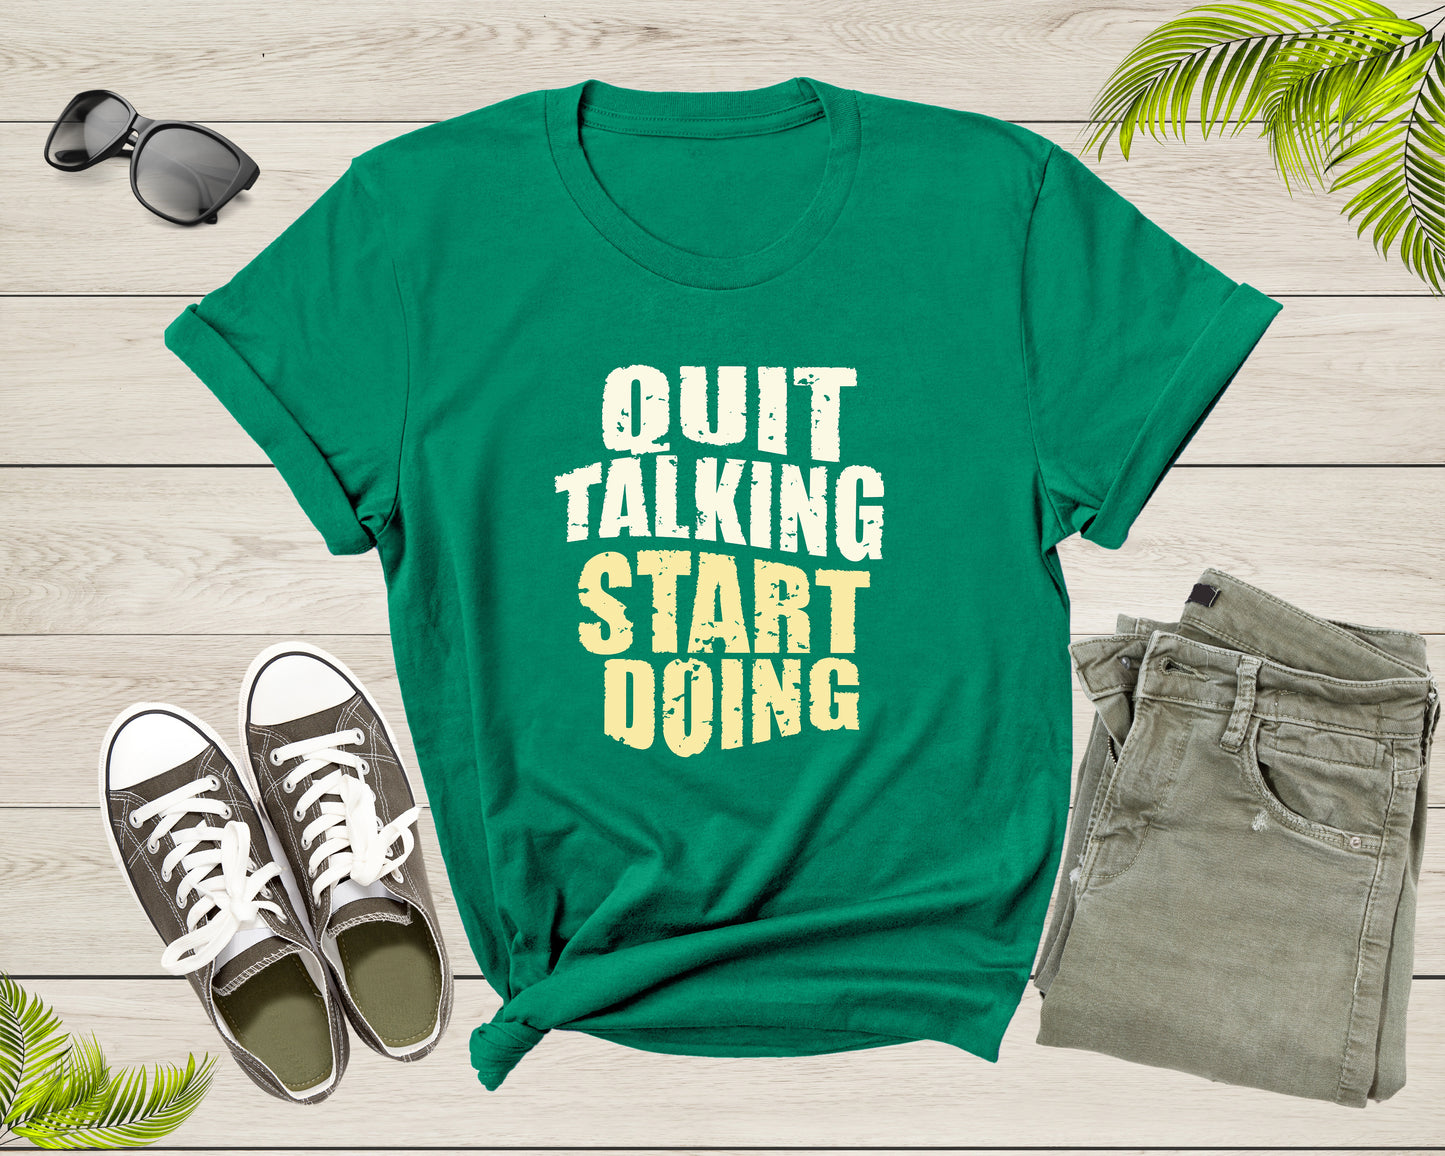 Quit Talking Start Doing Motivational Incentive Triggering T-Shirt Quote Lover Gift T Shirt for Men Women Kids Boys Girls Teens Tshirt